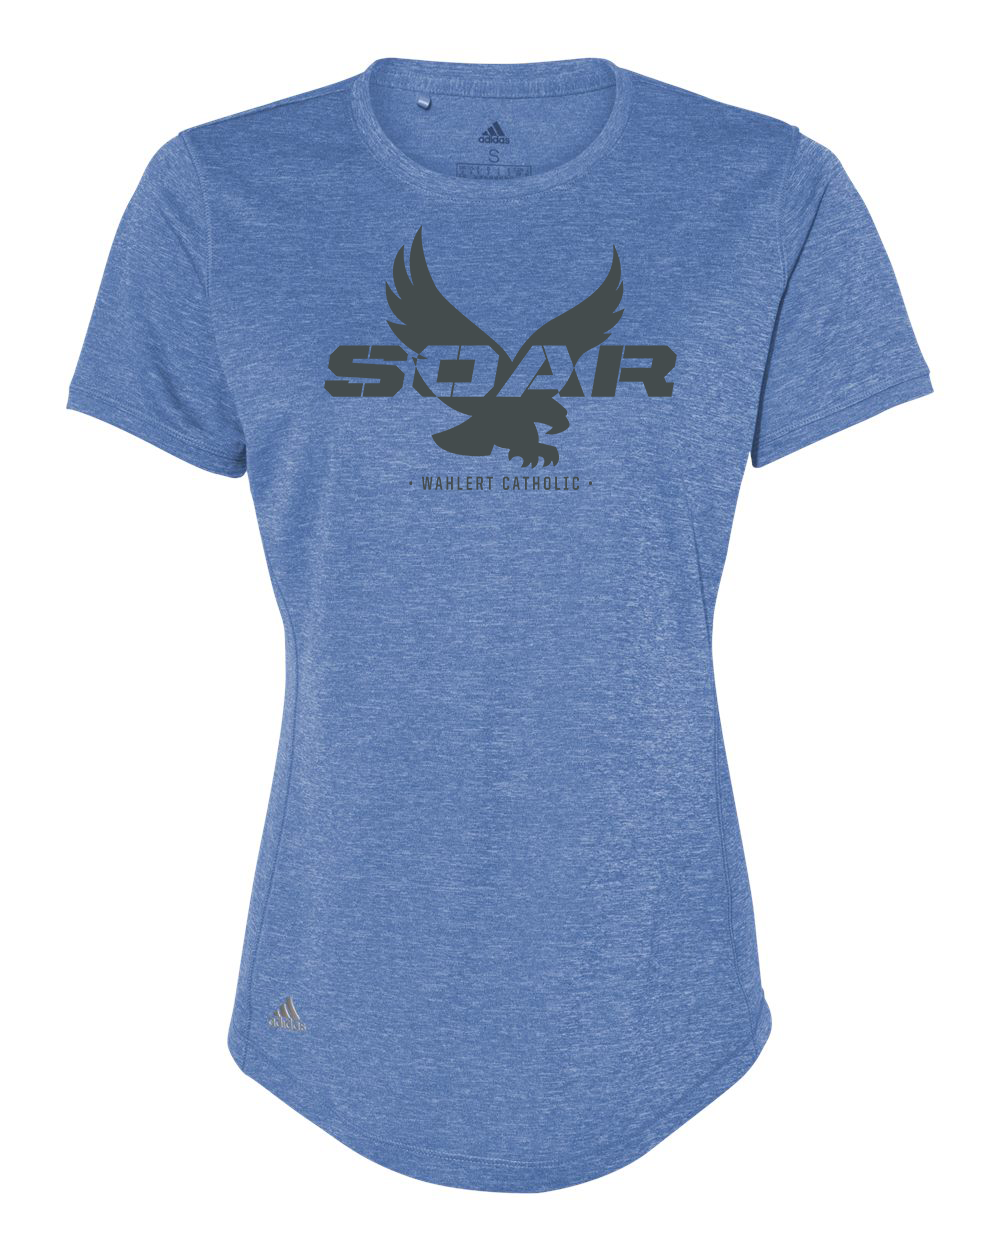 A377 - SOAR SPIRIT - Women's Adidas Sport TShirt